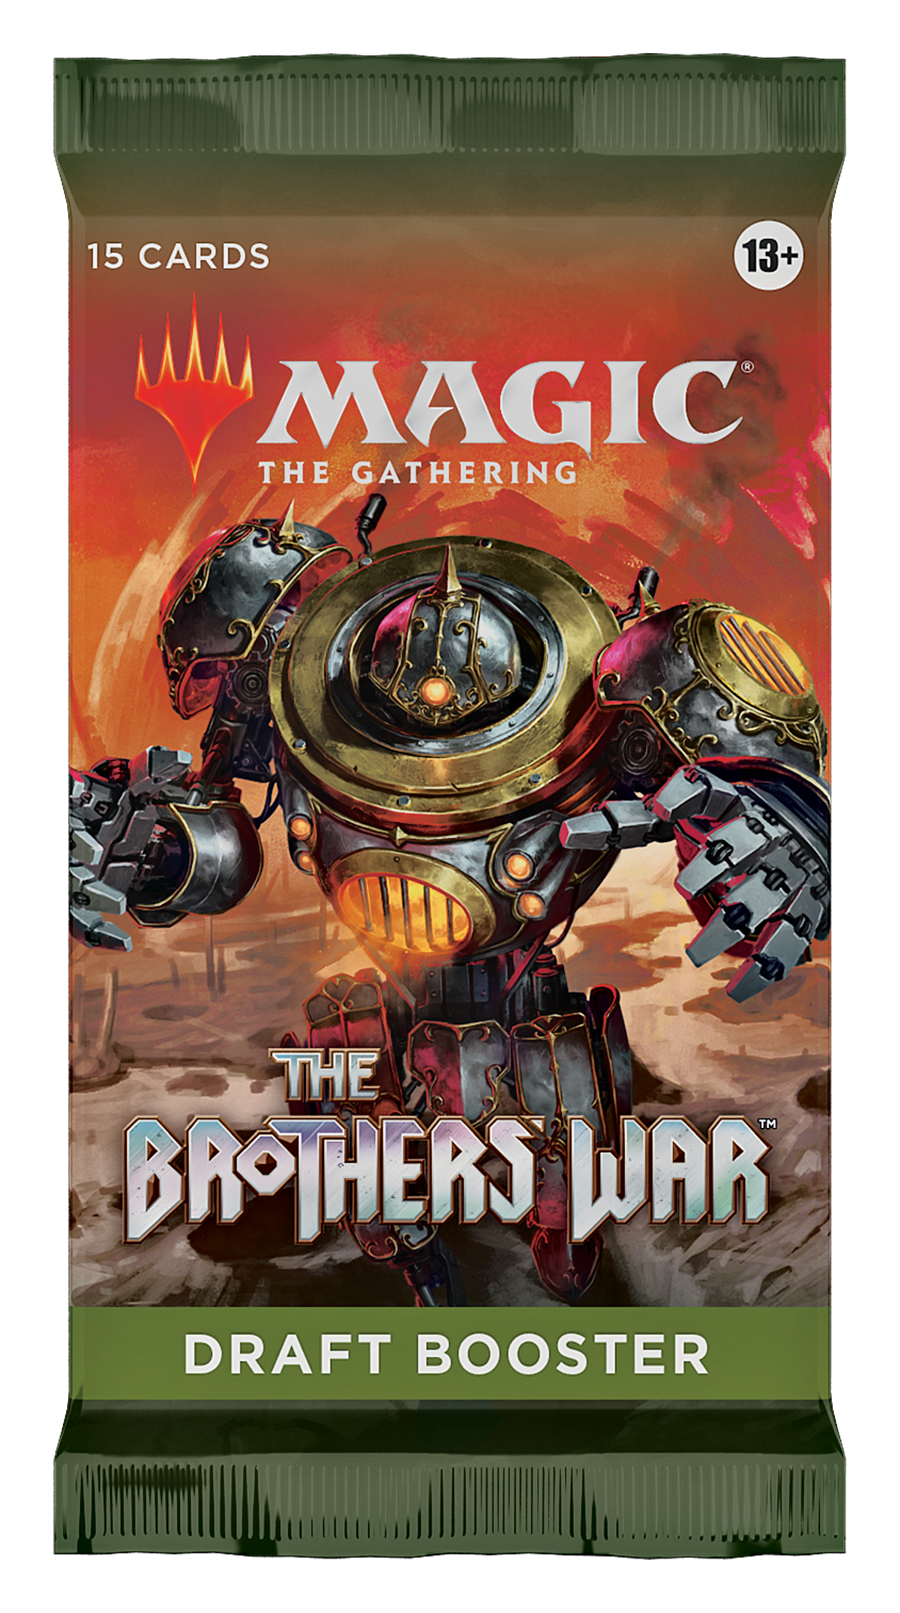 The Brothers' War - Draft Booster Display | Galaxy Games LLC